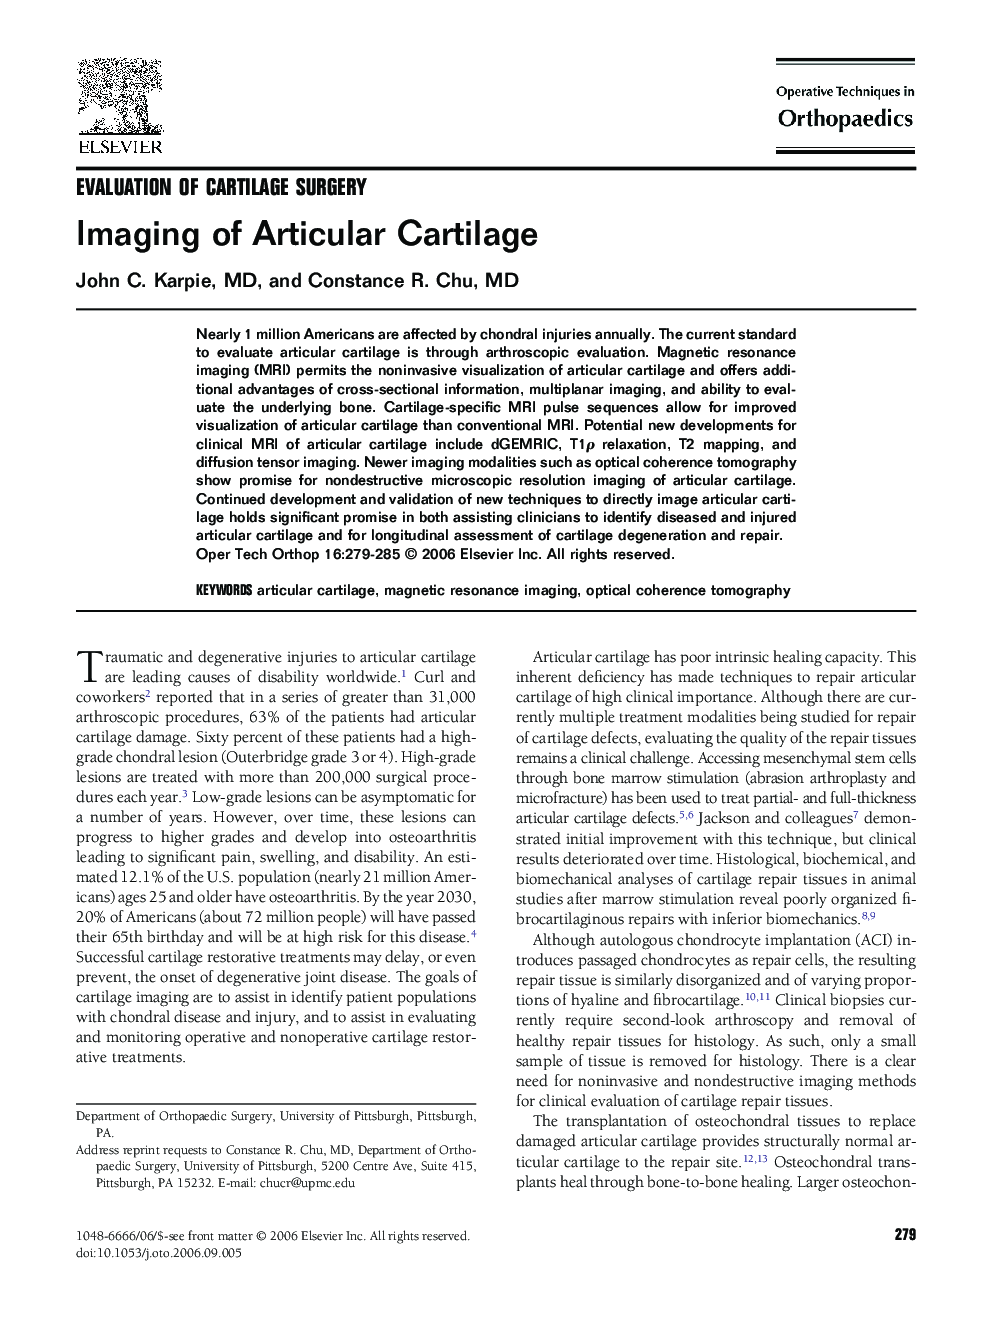 Imaging of Articular Cartilage